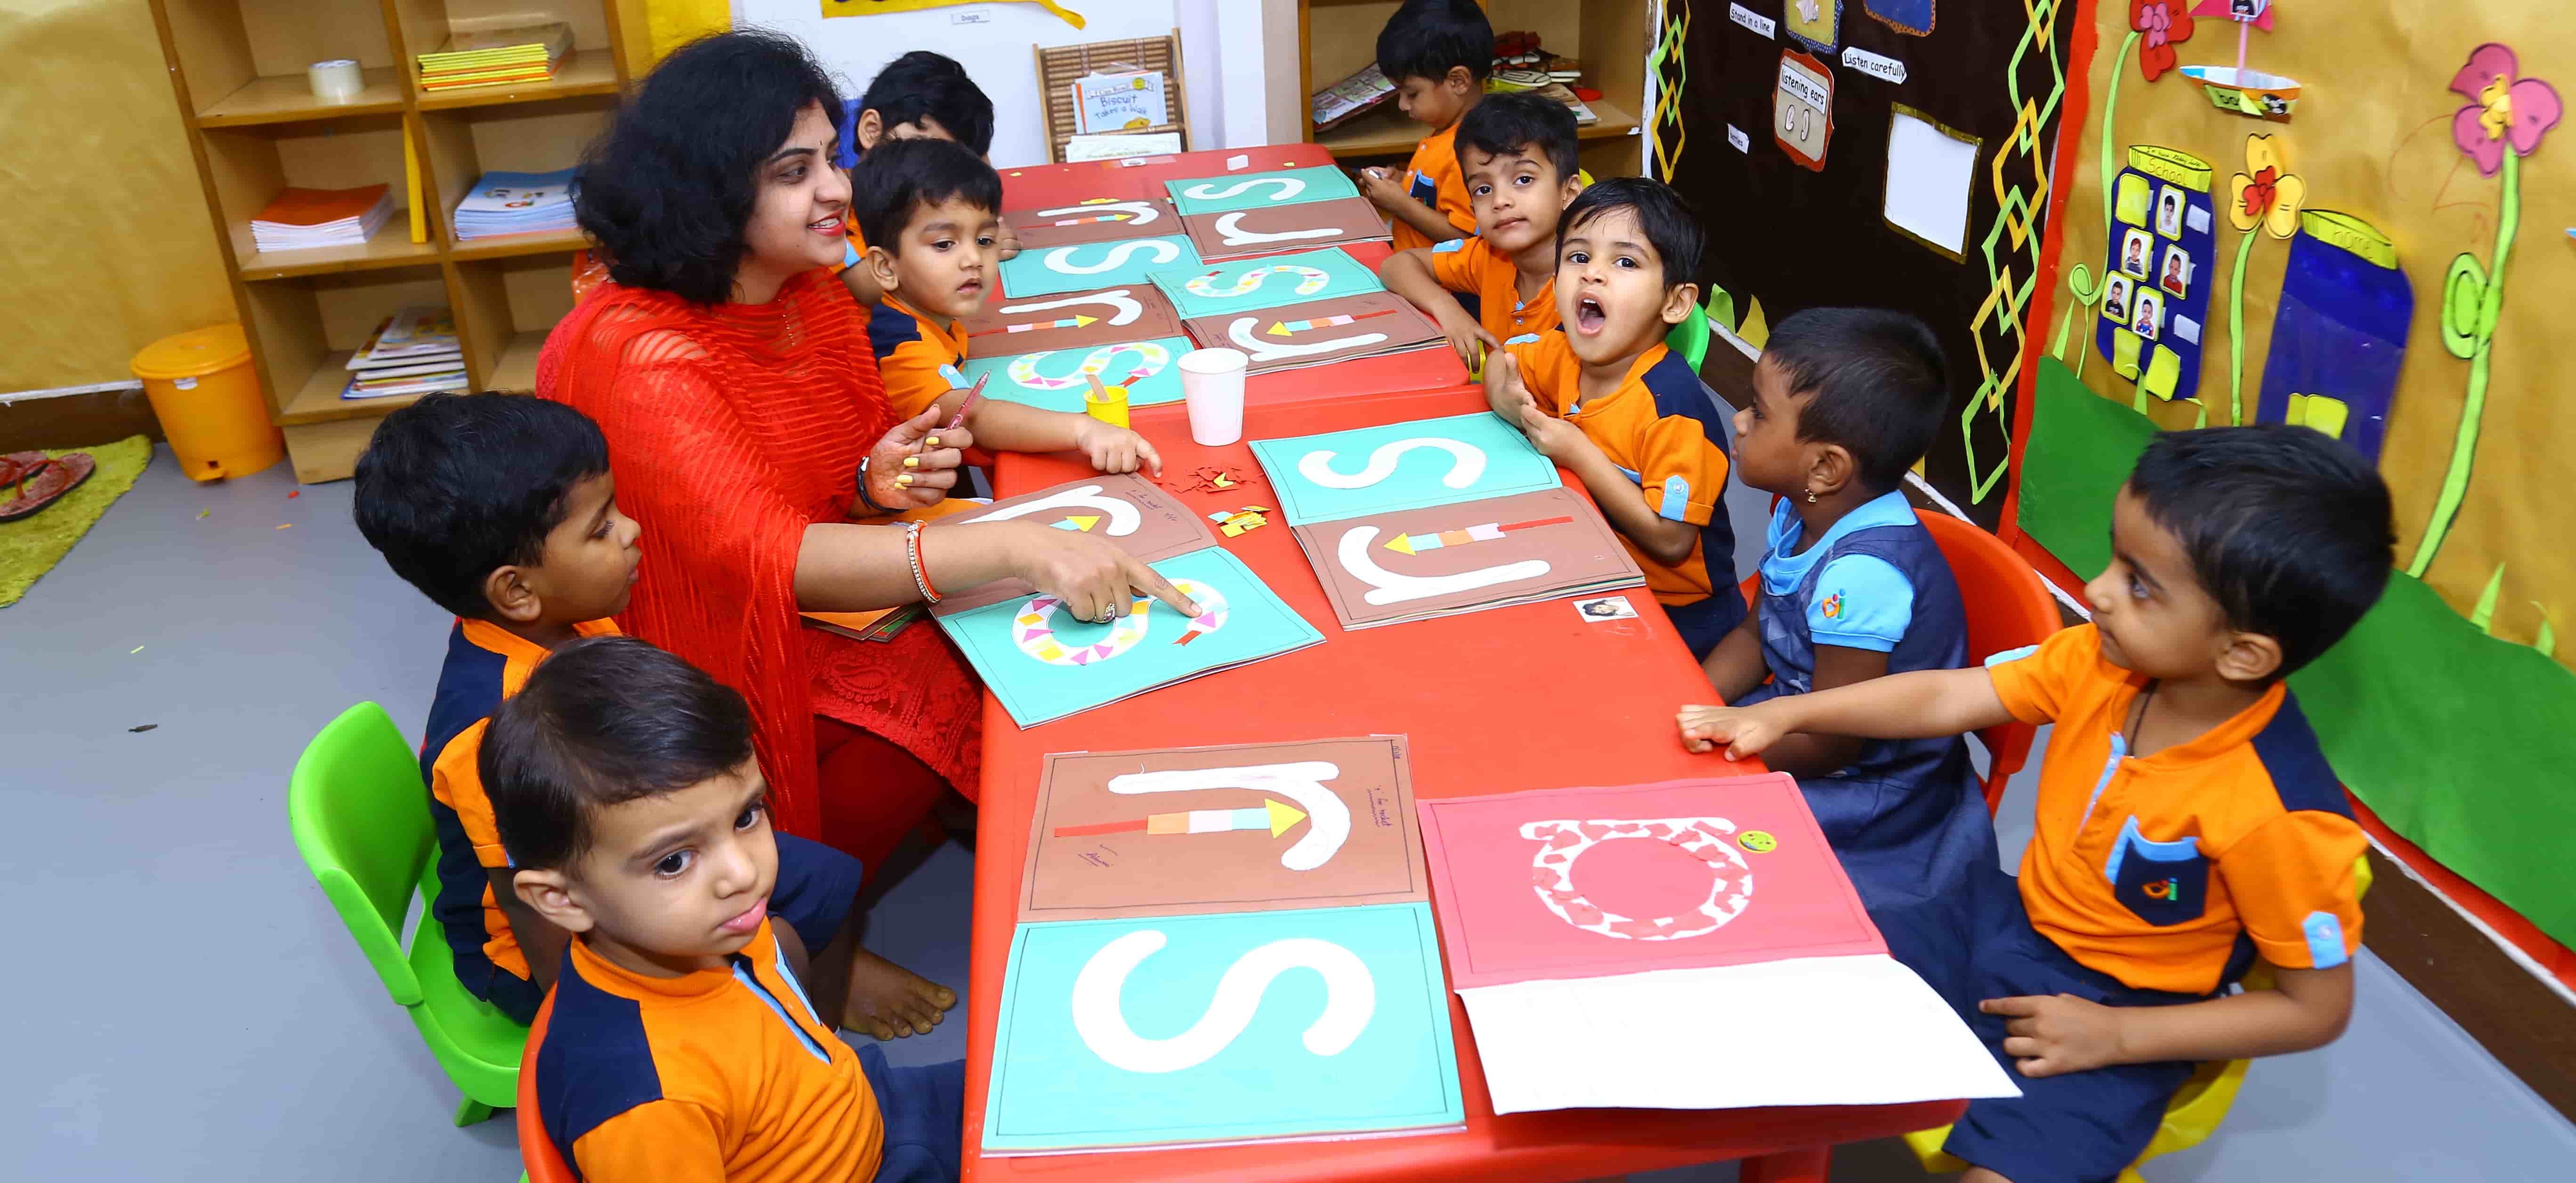 Preschool Environment, Preschool Environment, Daycare Environment, Hyderabad, Bangalore, India